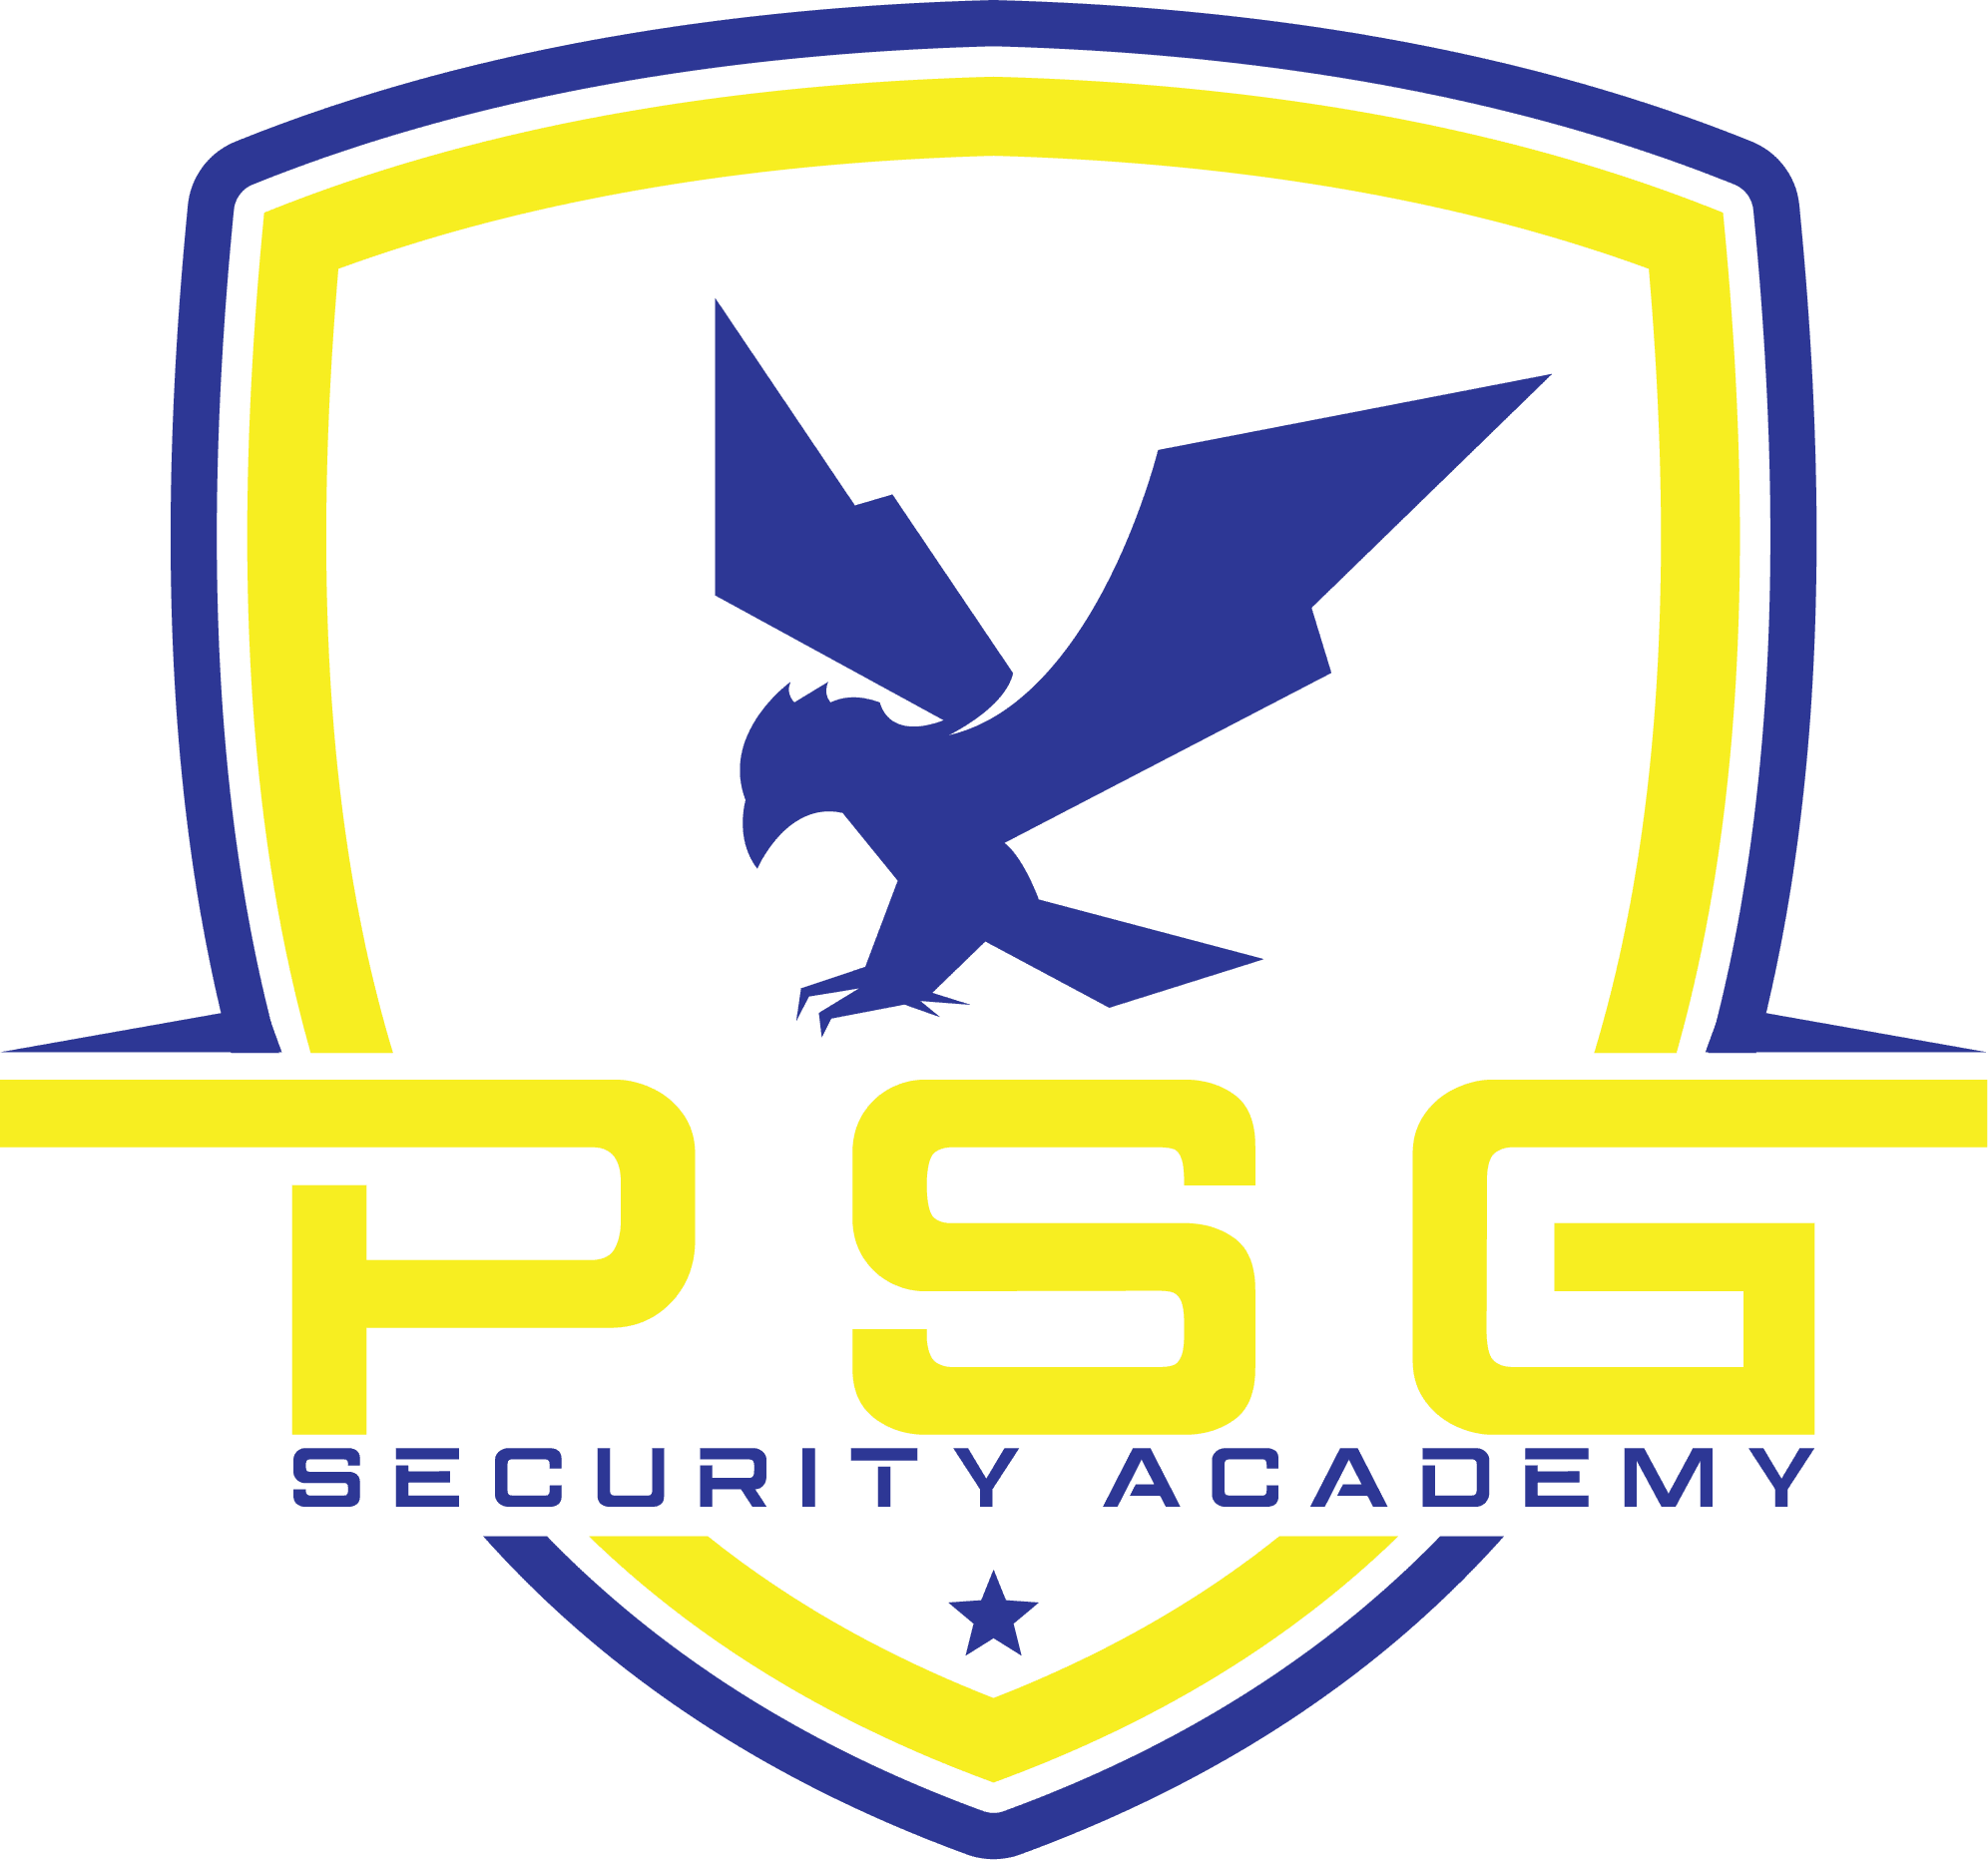 PSG Security Academy